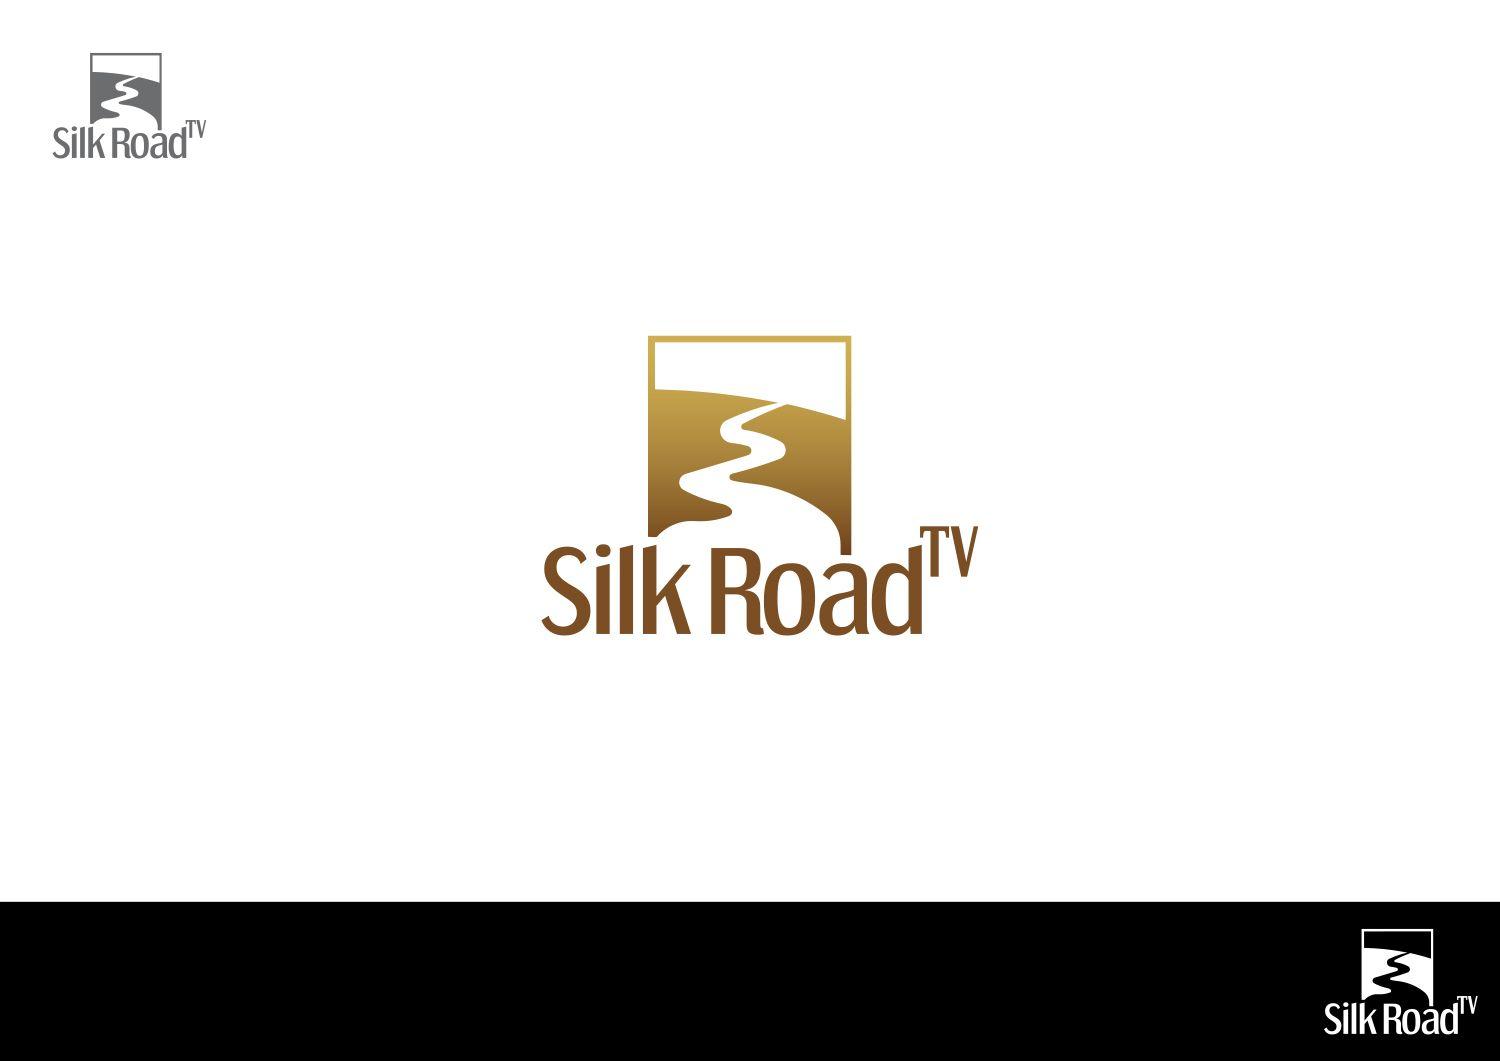 Road Logo - Professional, Bold, Television Station Logo Design for Silk Road TV ...